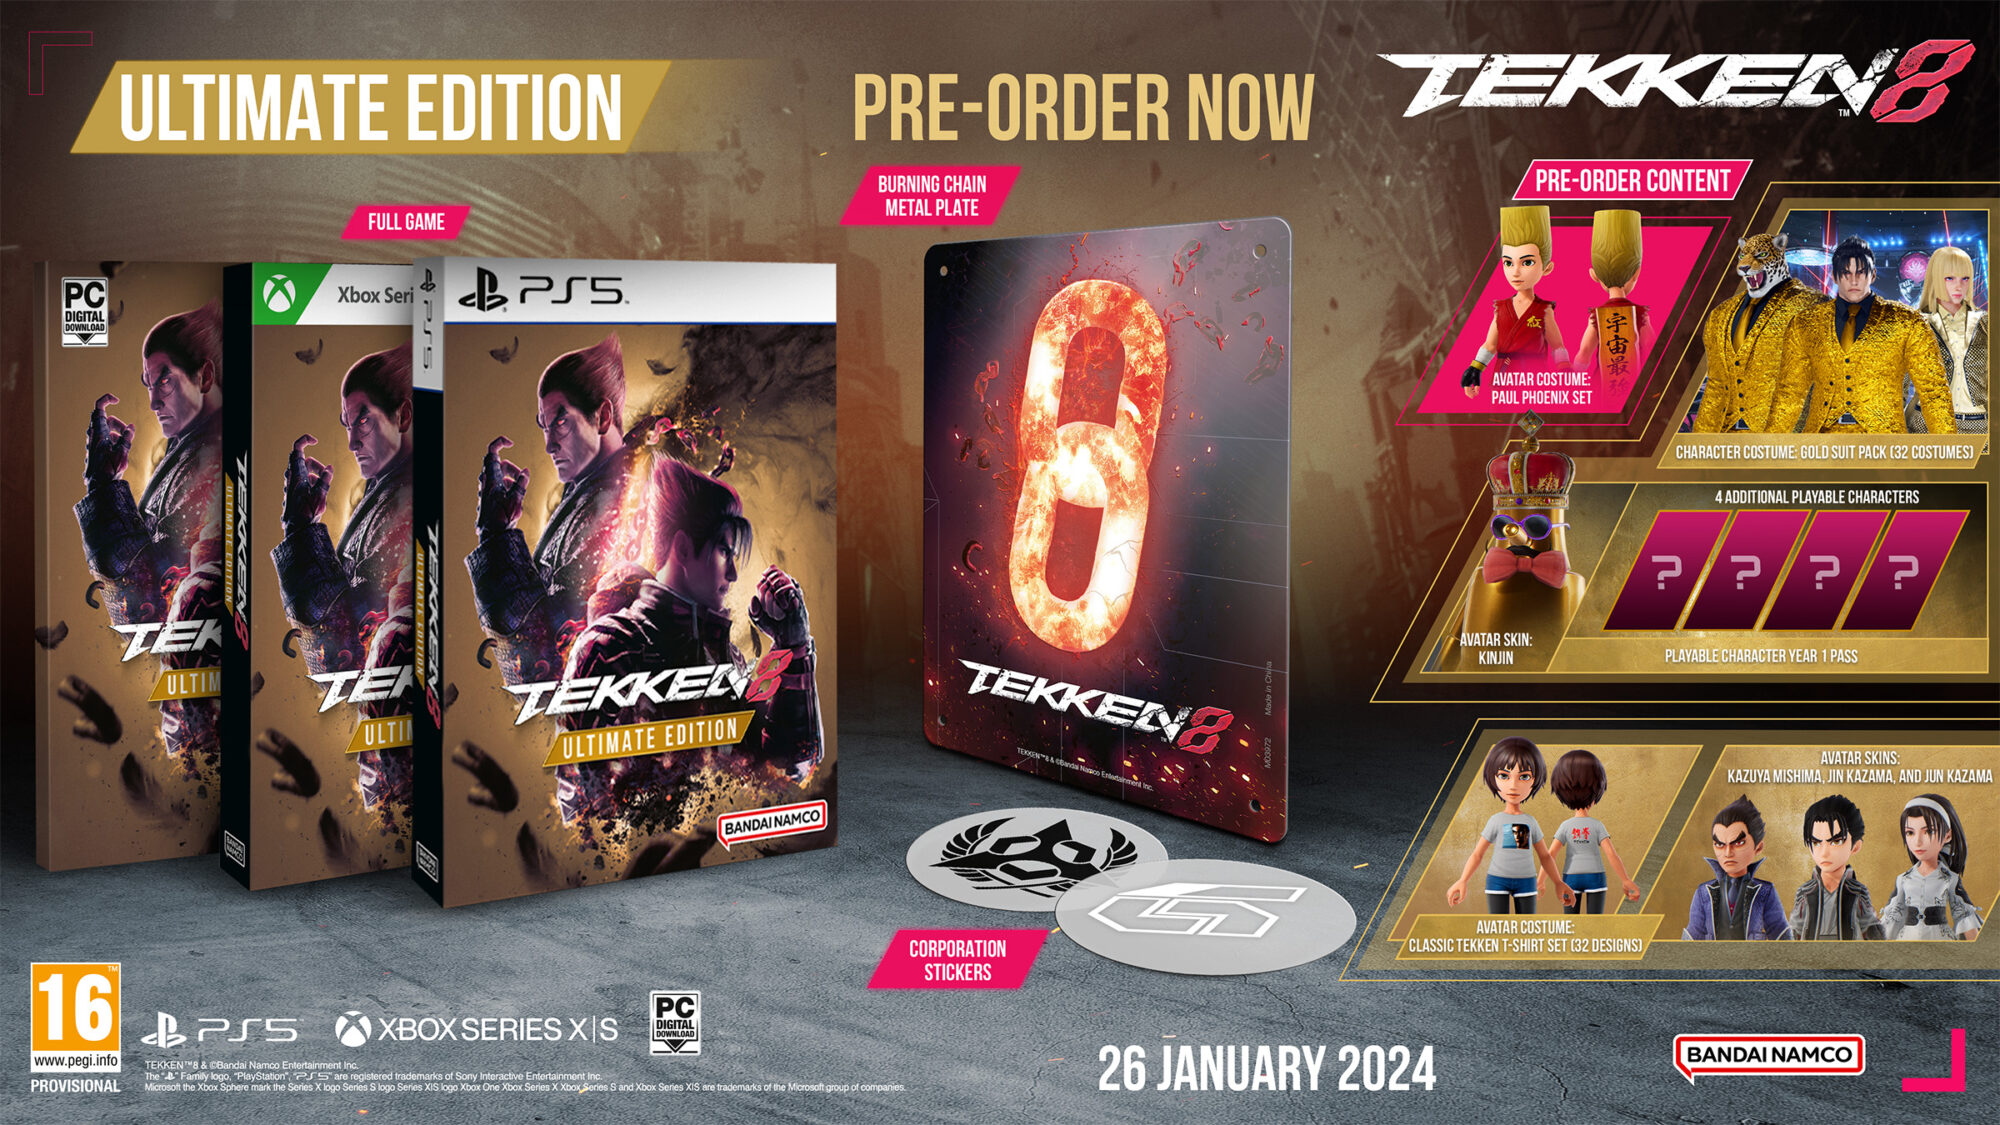 Tekken 8 (Video Game 2024) - IMDb